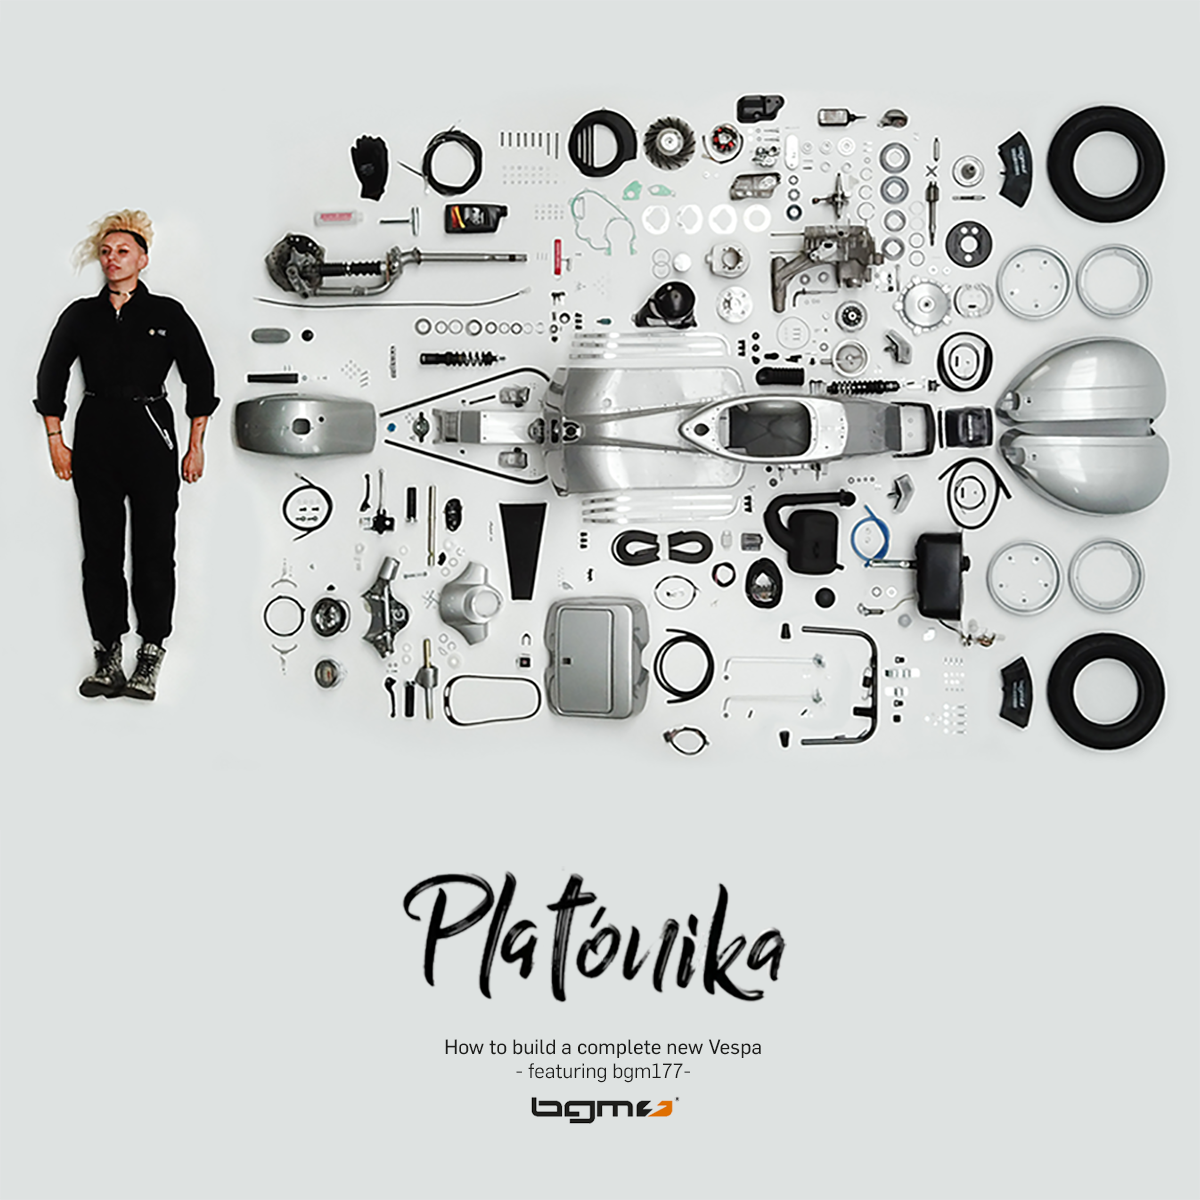 Platónika - Come costruire una Vespa completamente nuova